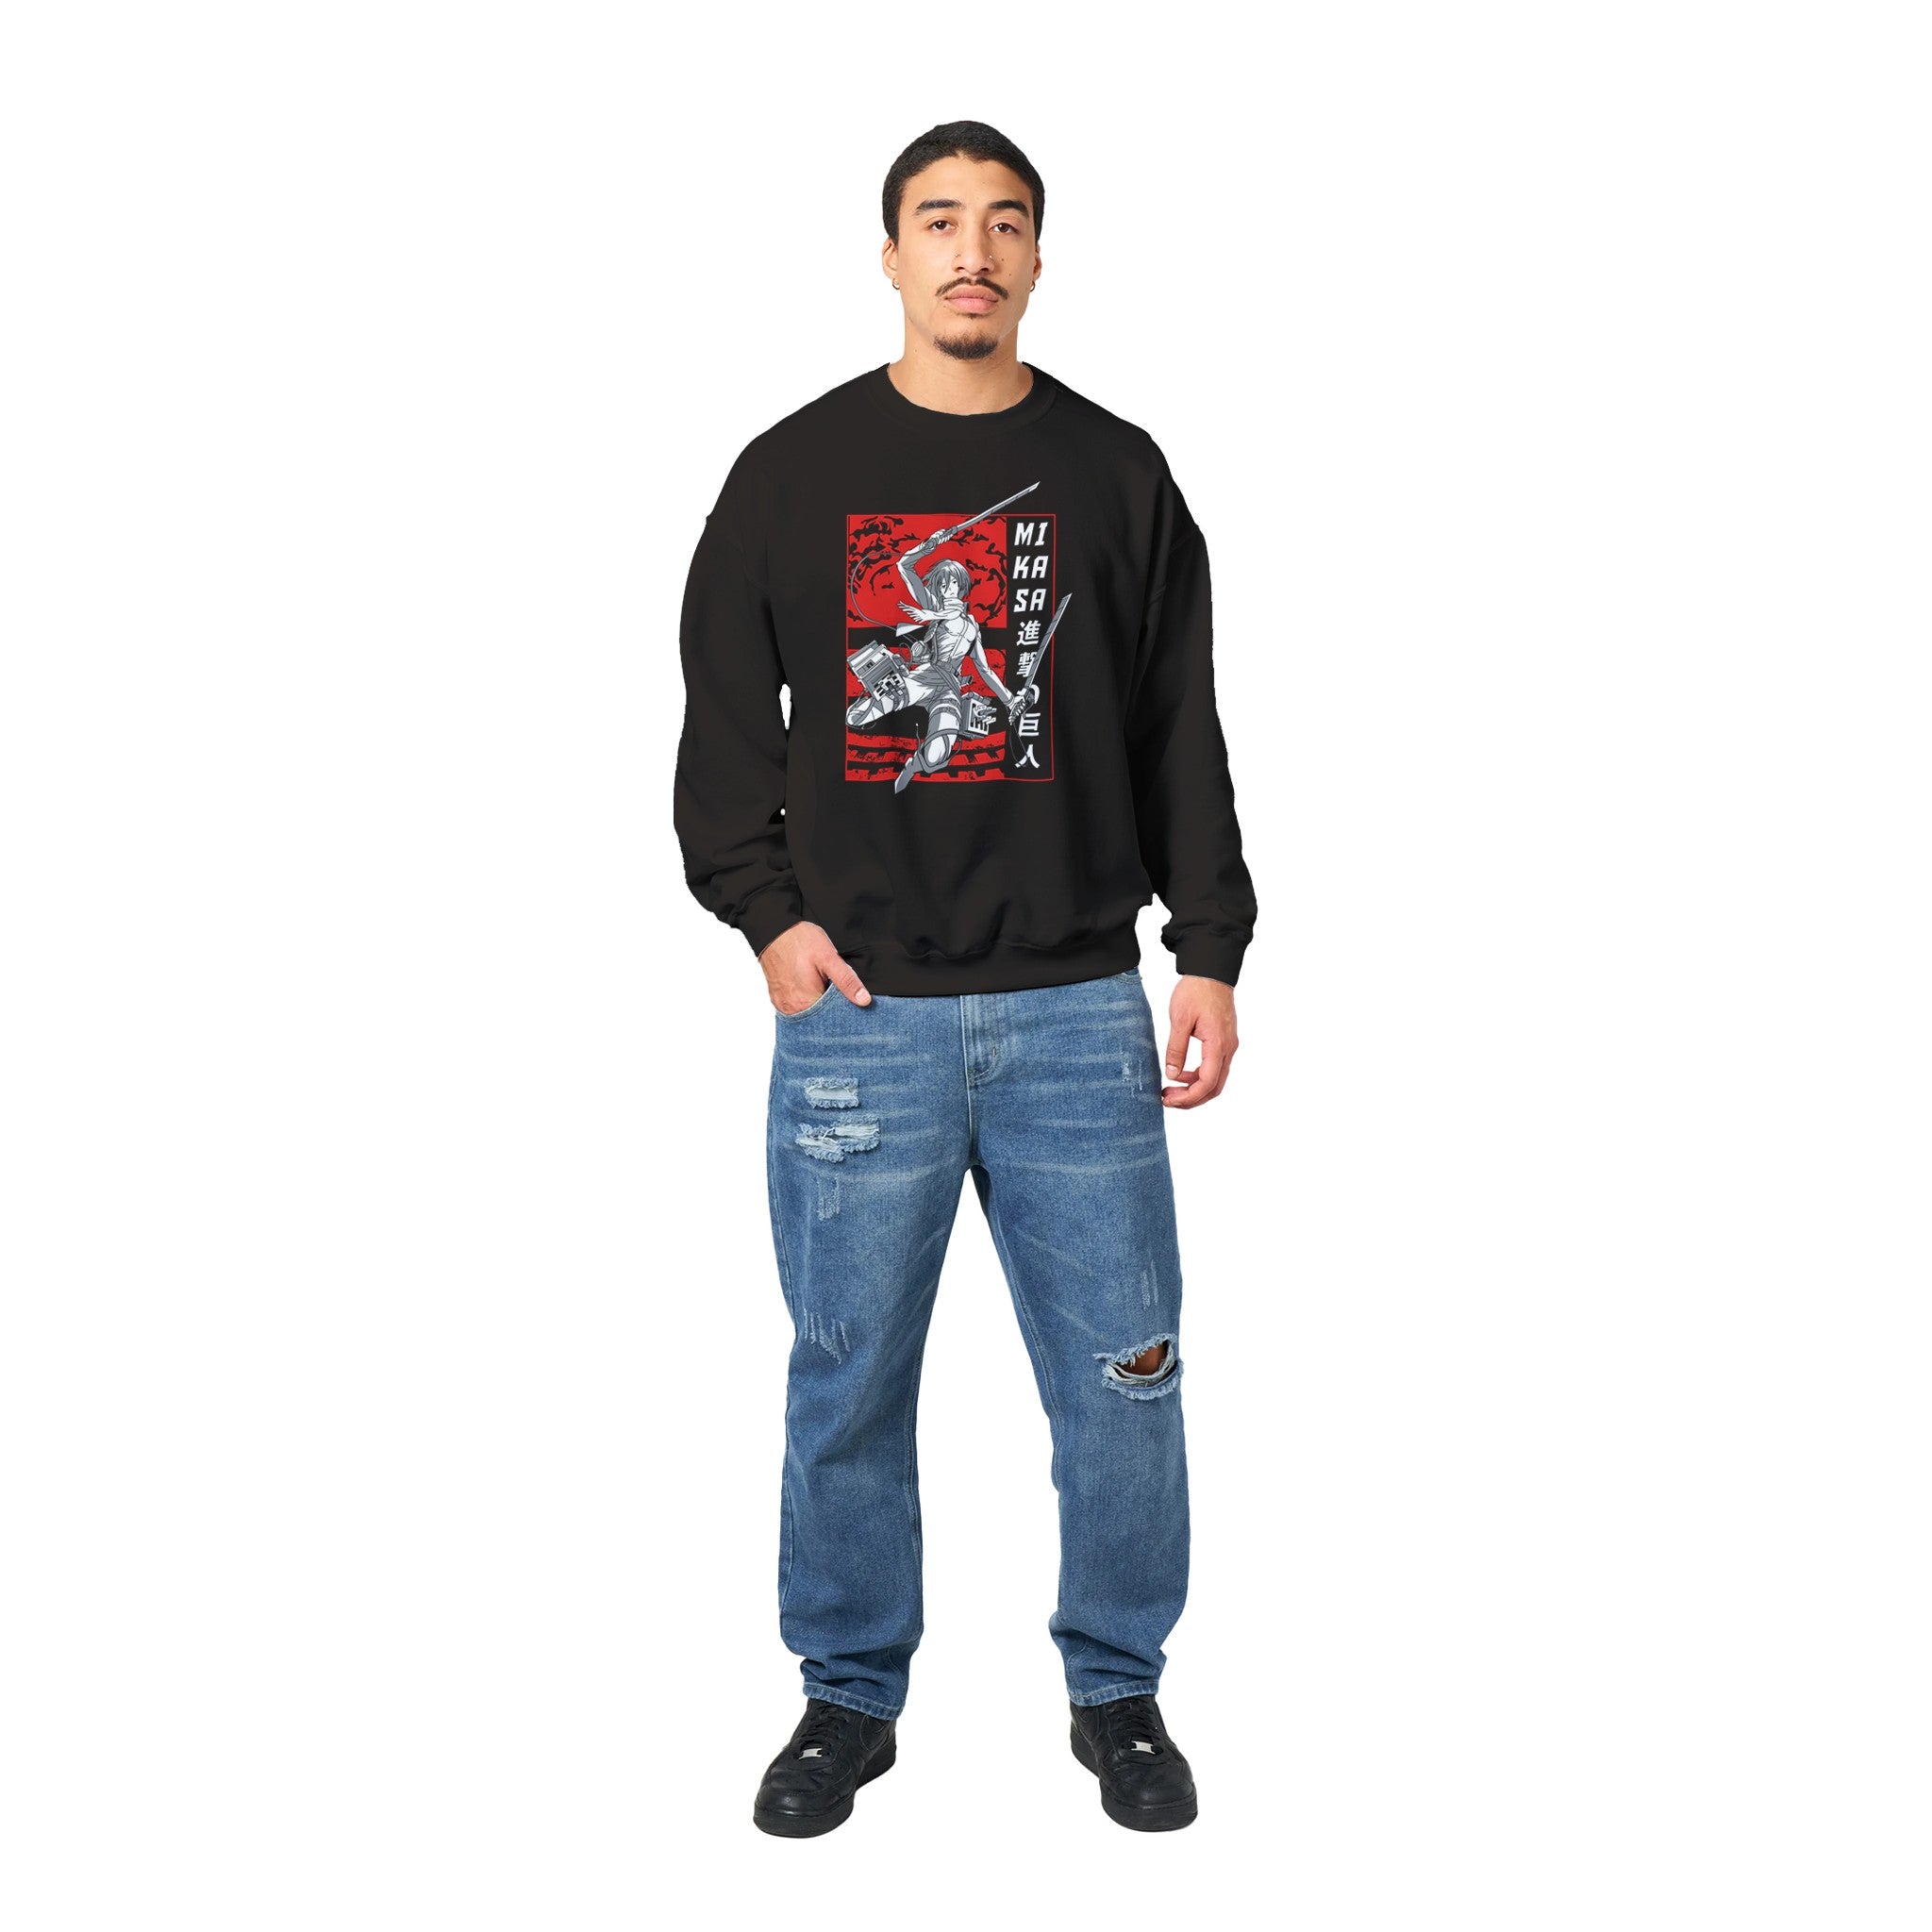 shop and buy attack on titan anime clothing mikasa sweatshirt/longsleeve/jumper